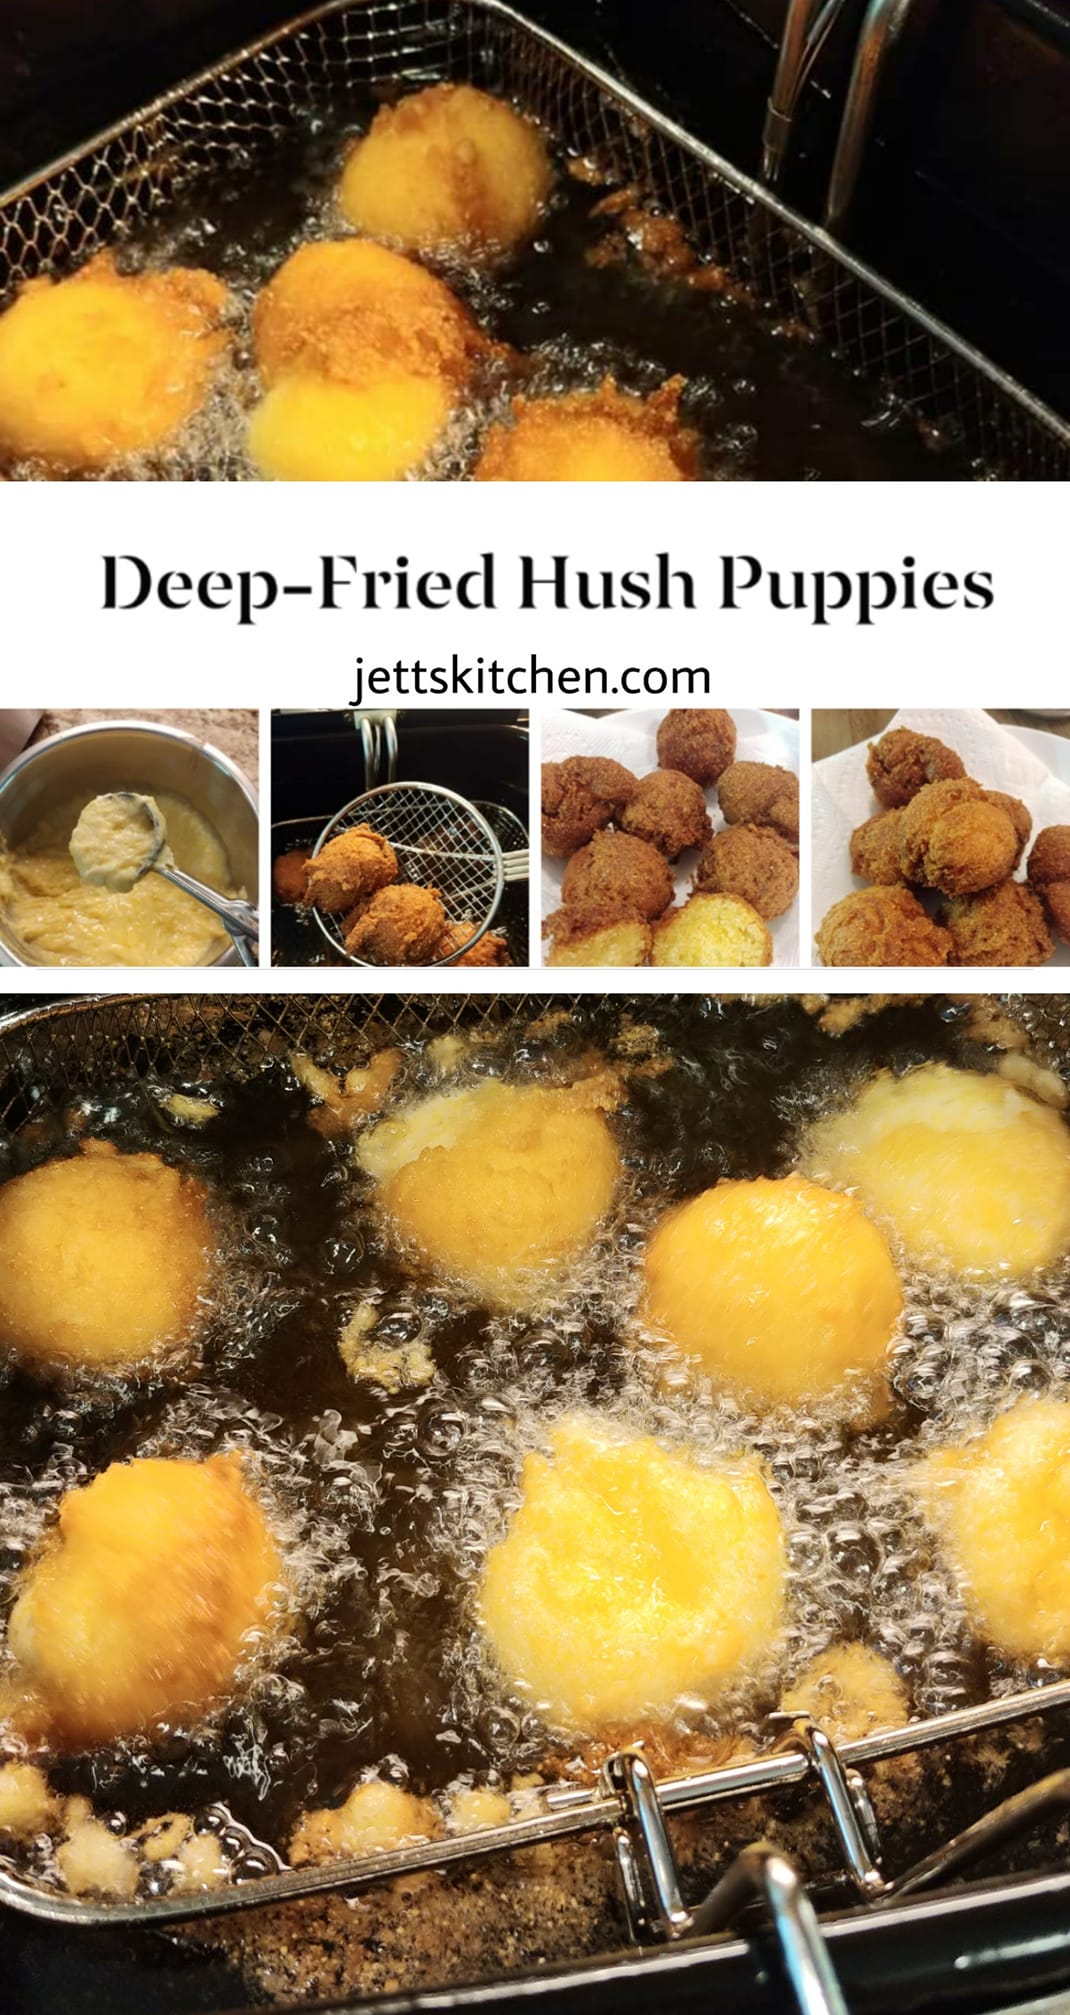 Deep-Fried Southern Hush Puppies Recipe